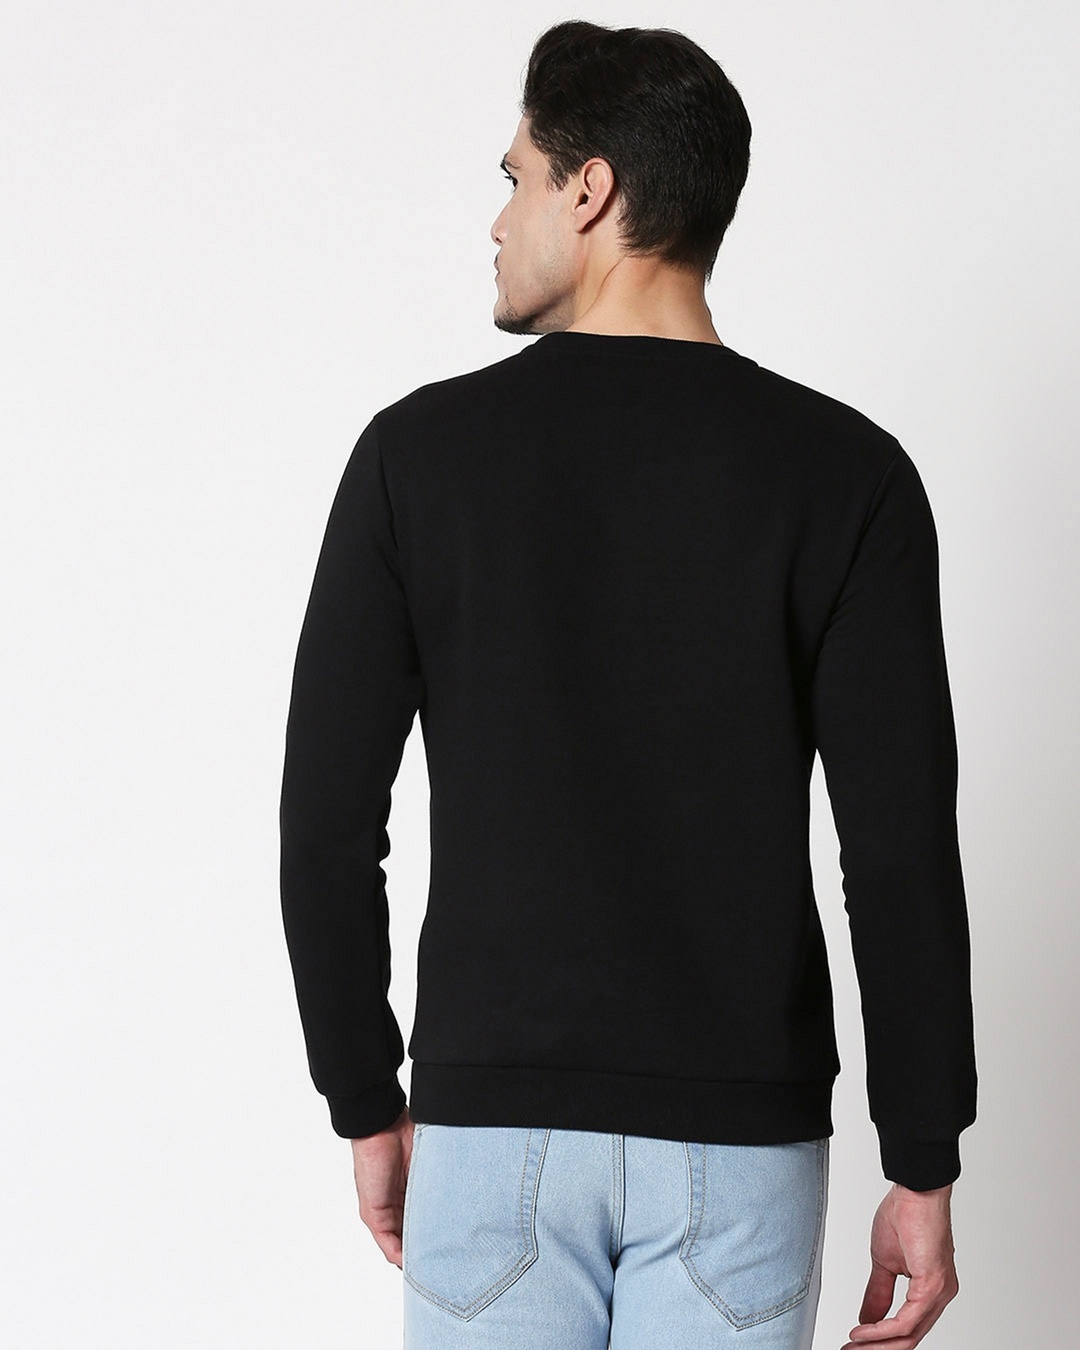 Shop Toxic Human Fleece Sweatshirt Black-Full